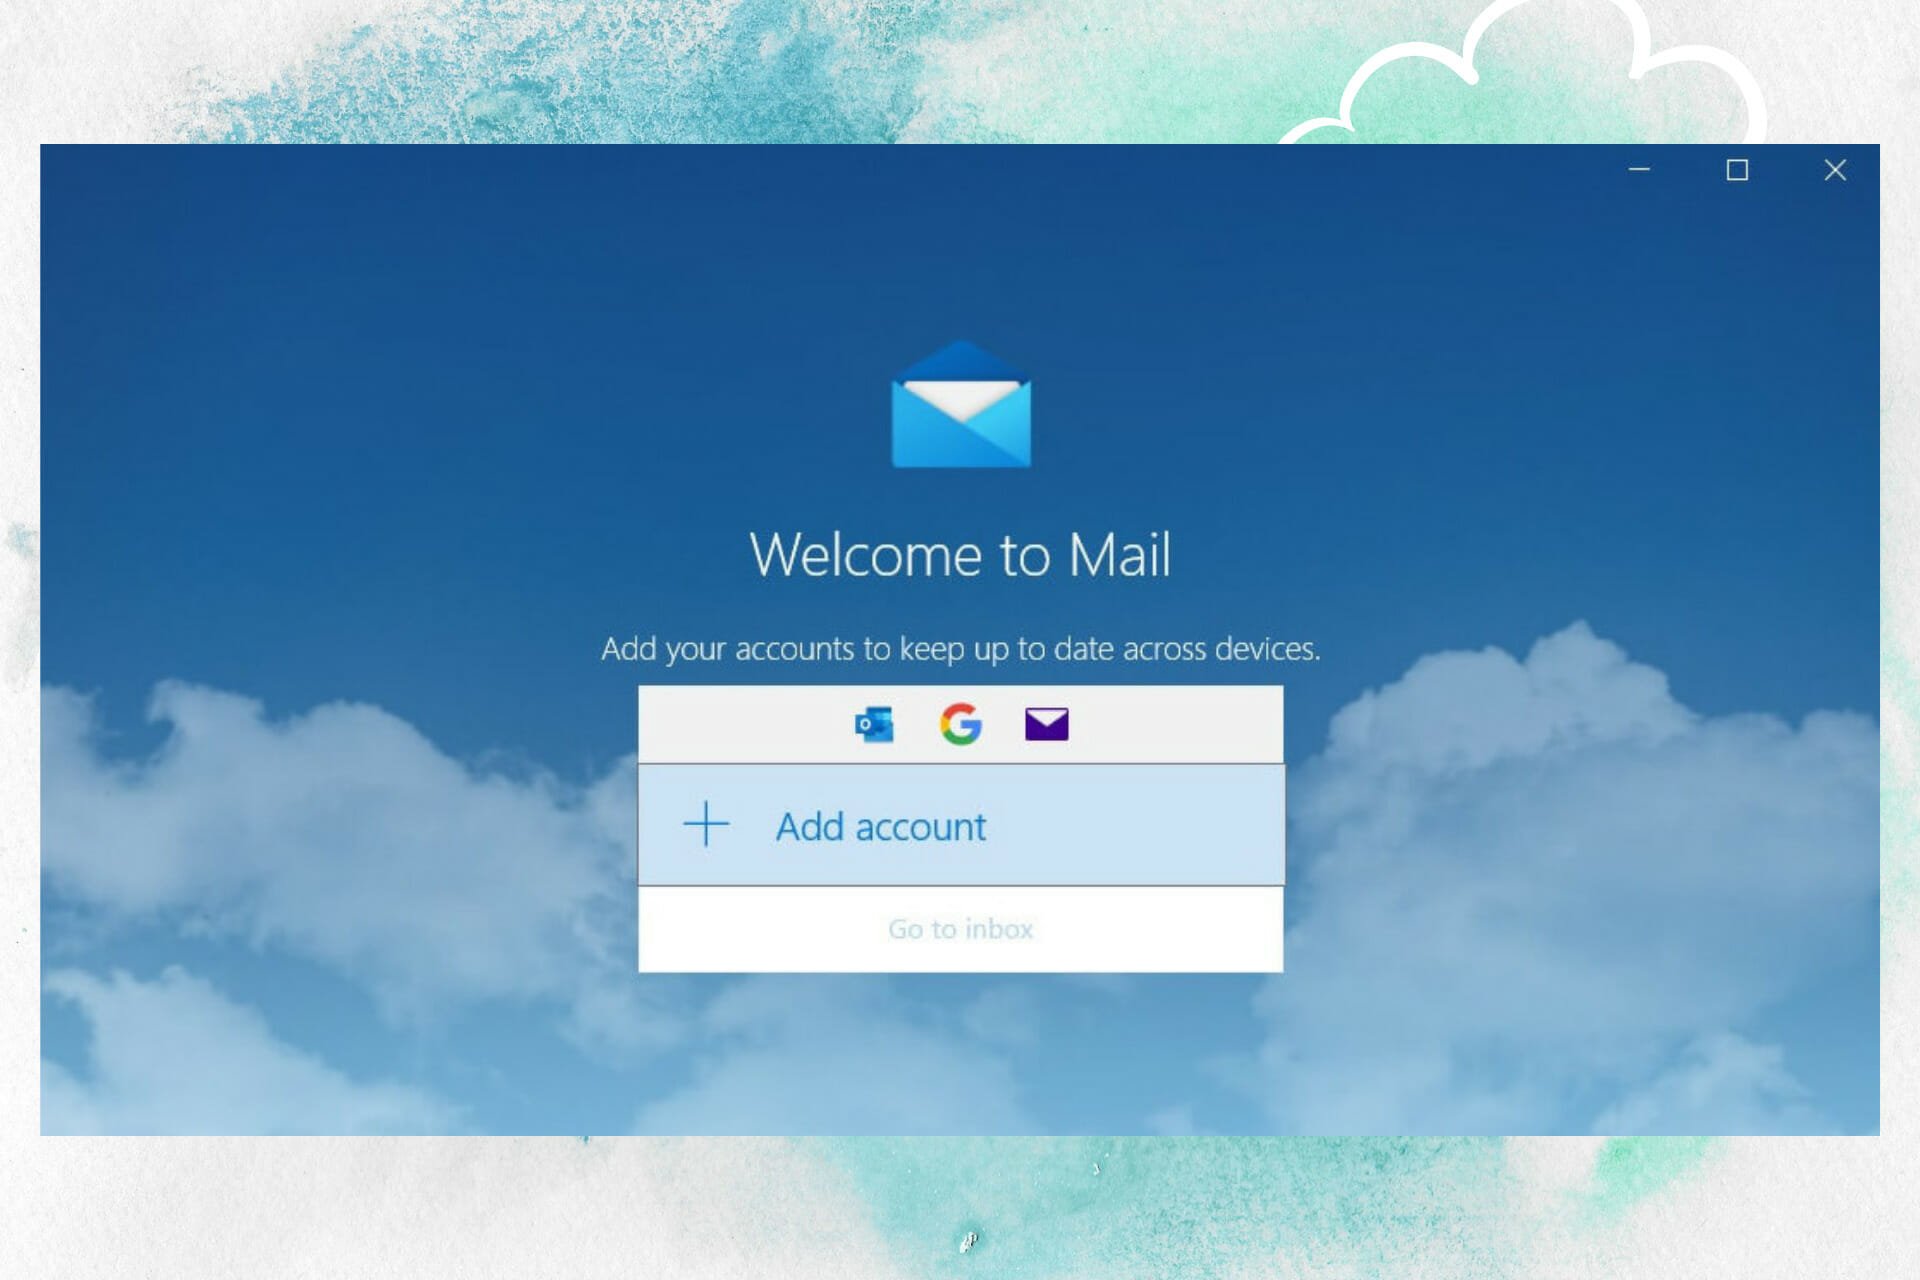 Microsoft Mail's add account window